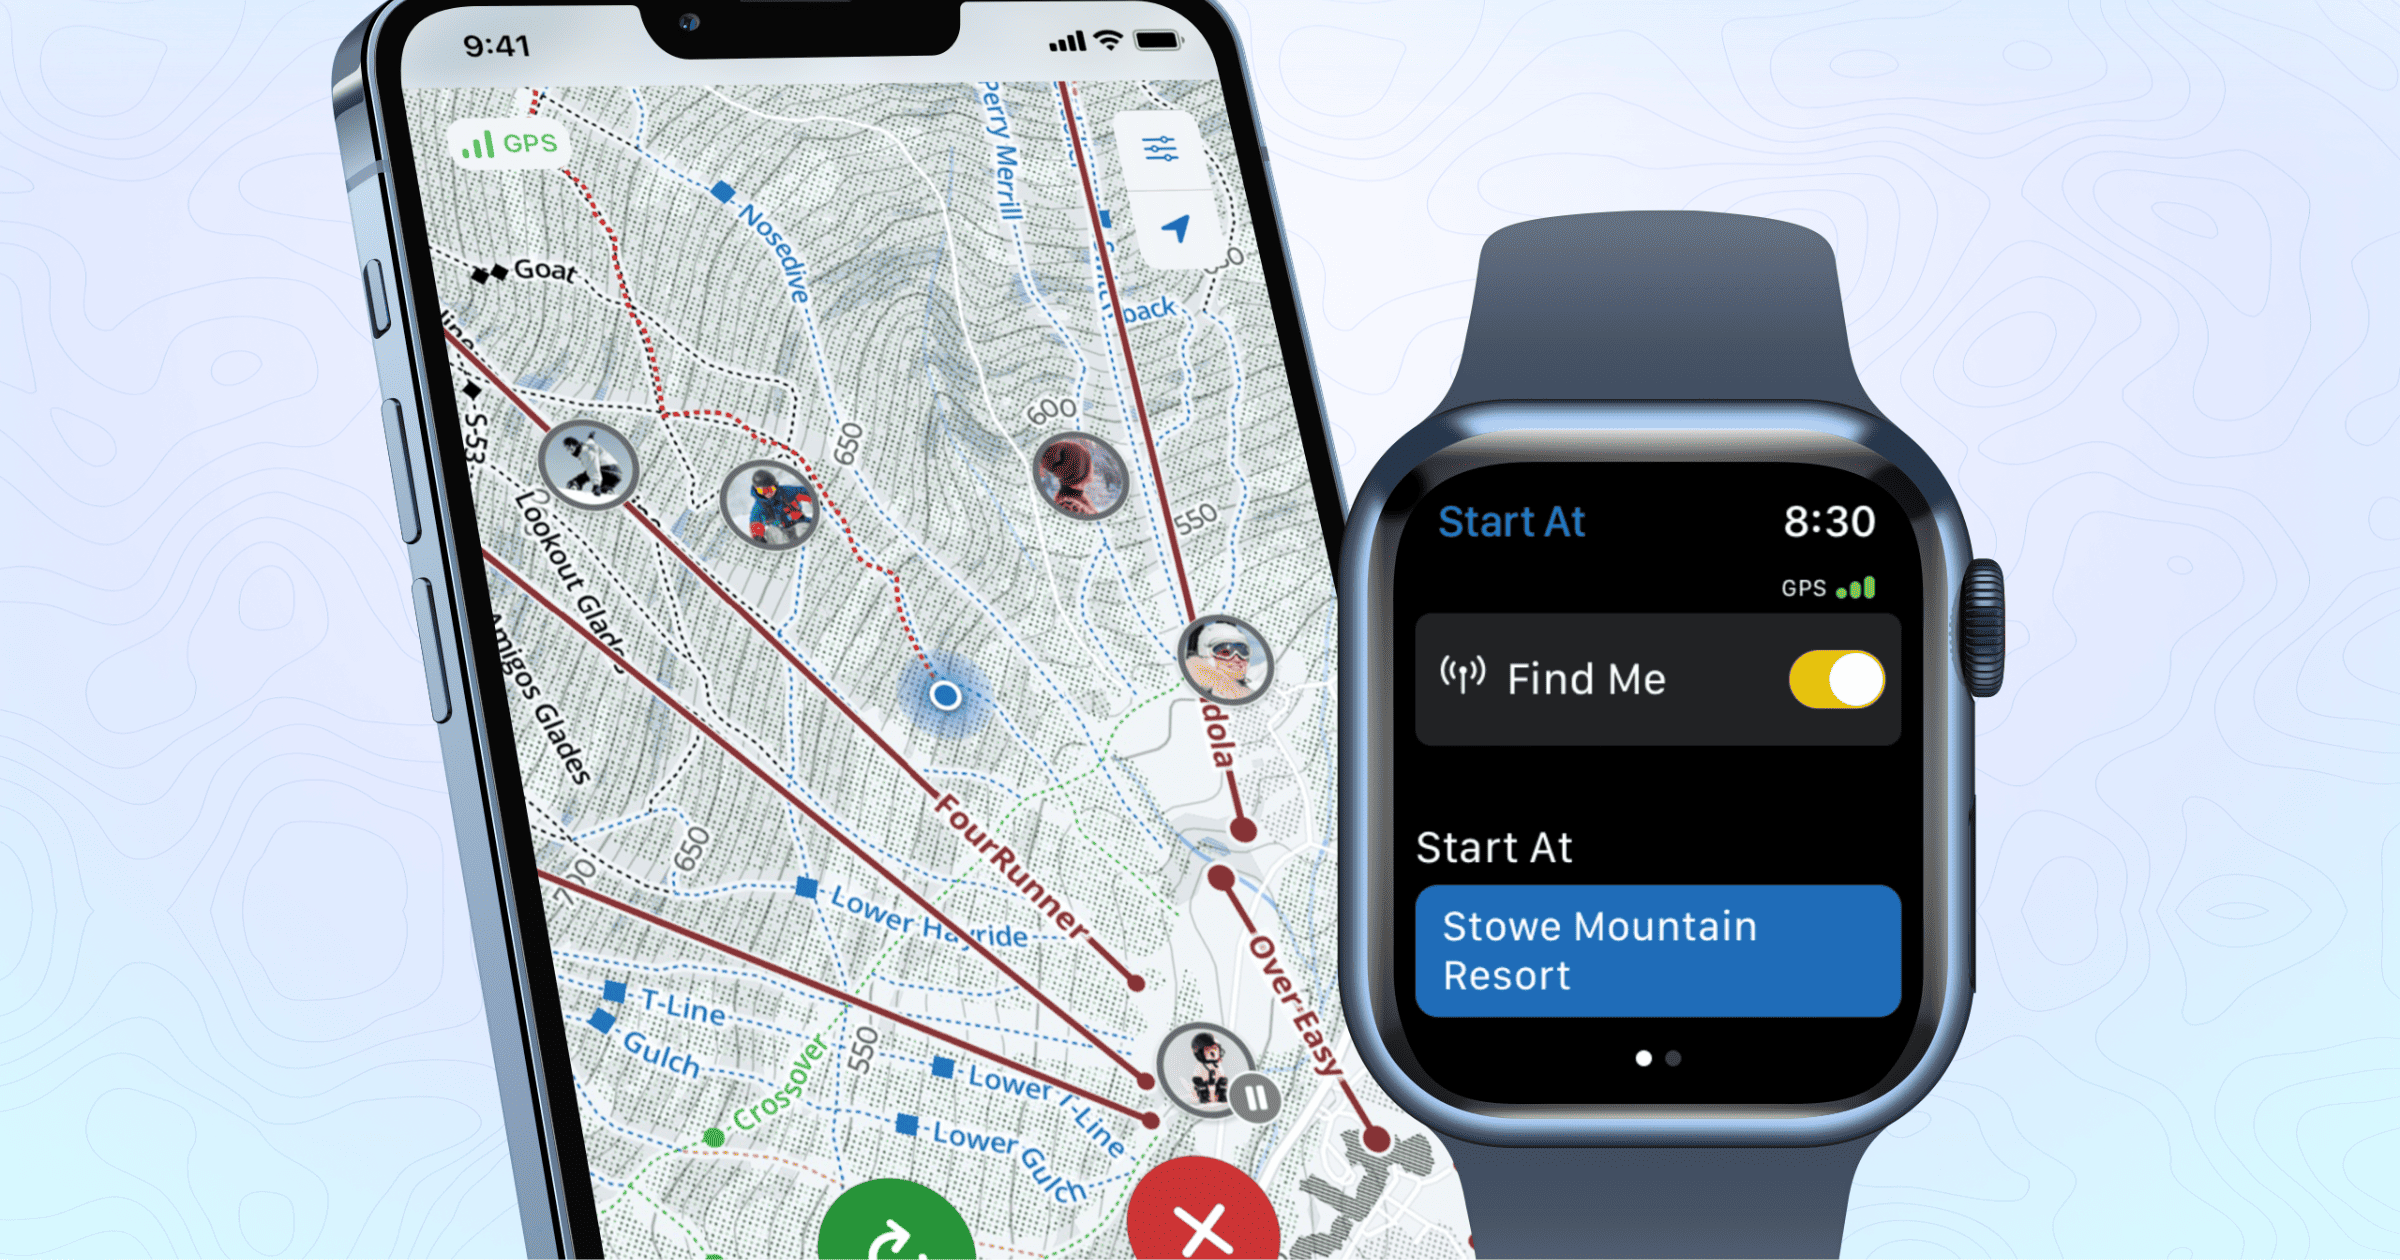 Slopes Ski Tracking App on iOS Gets Major Update